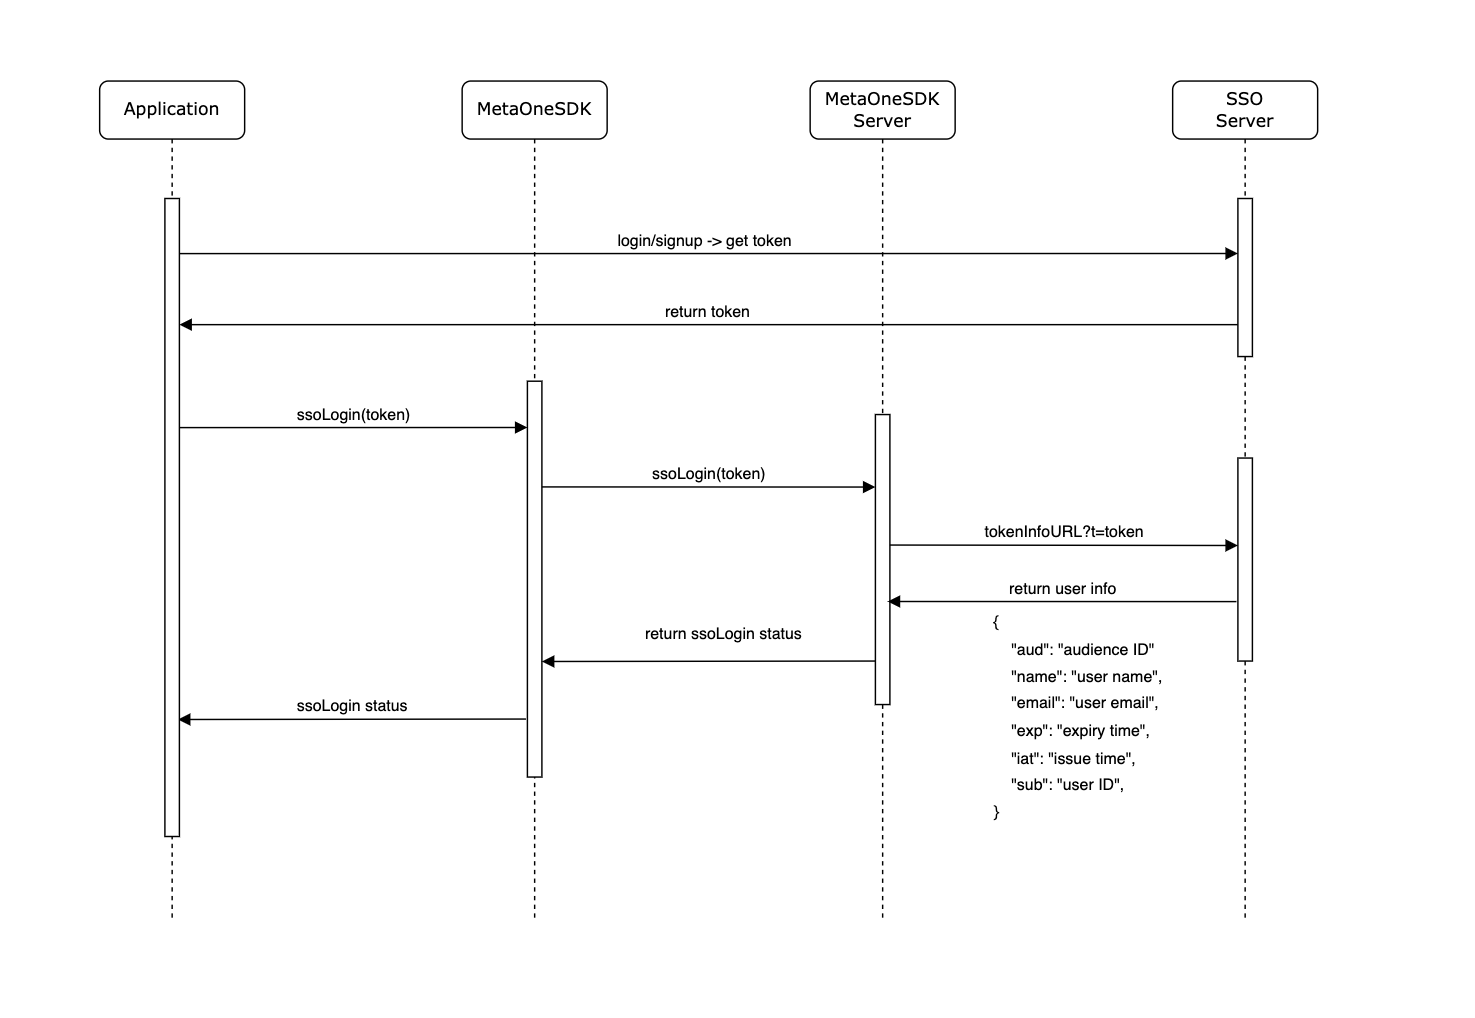 MetaOne SDK Sequence Diagram